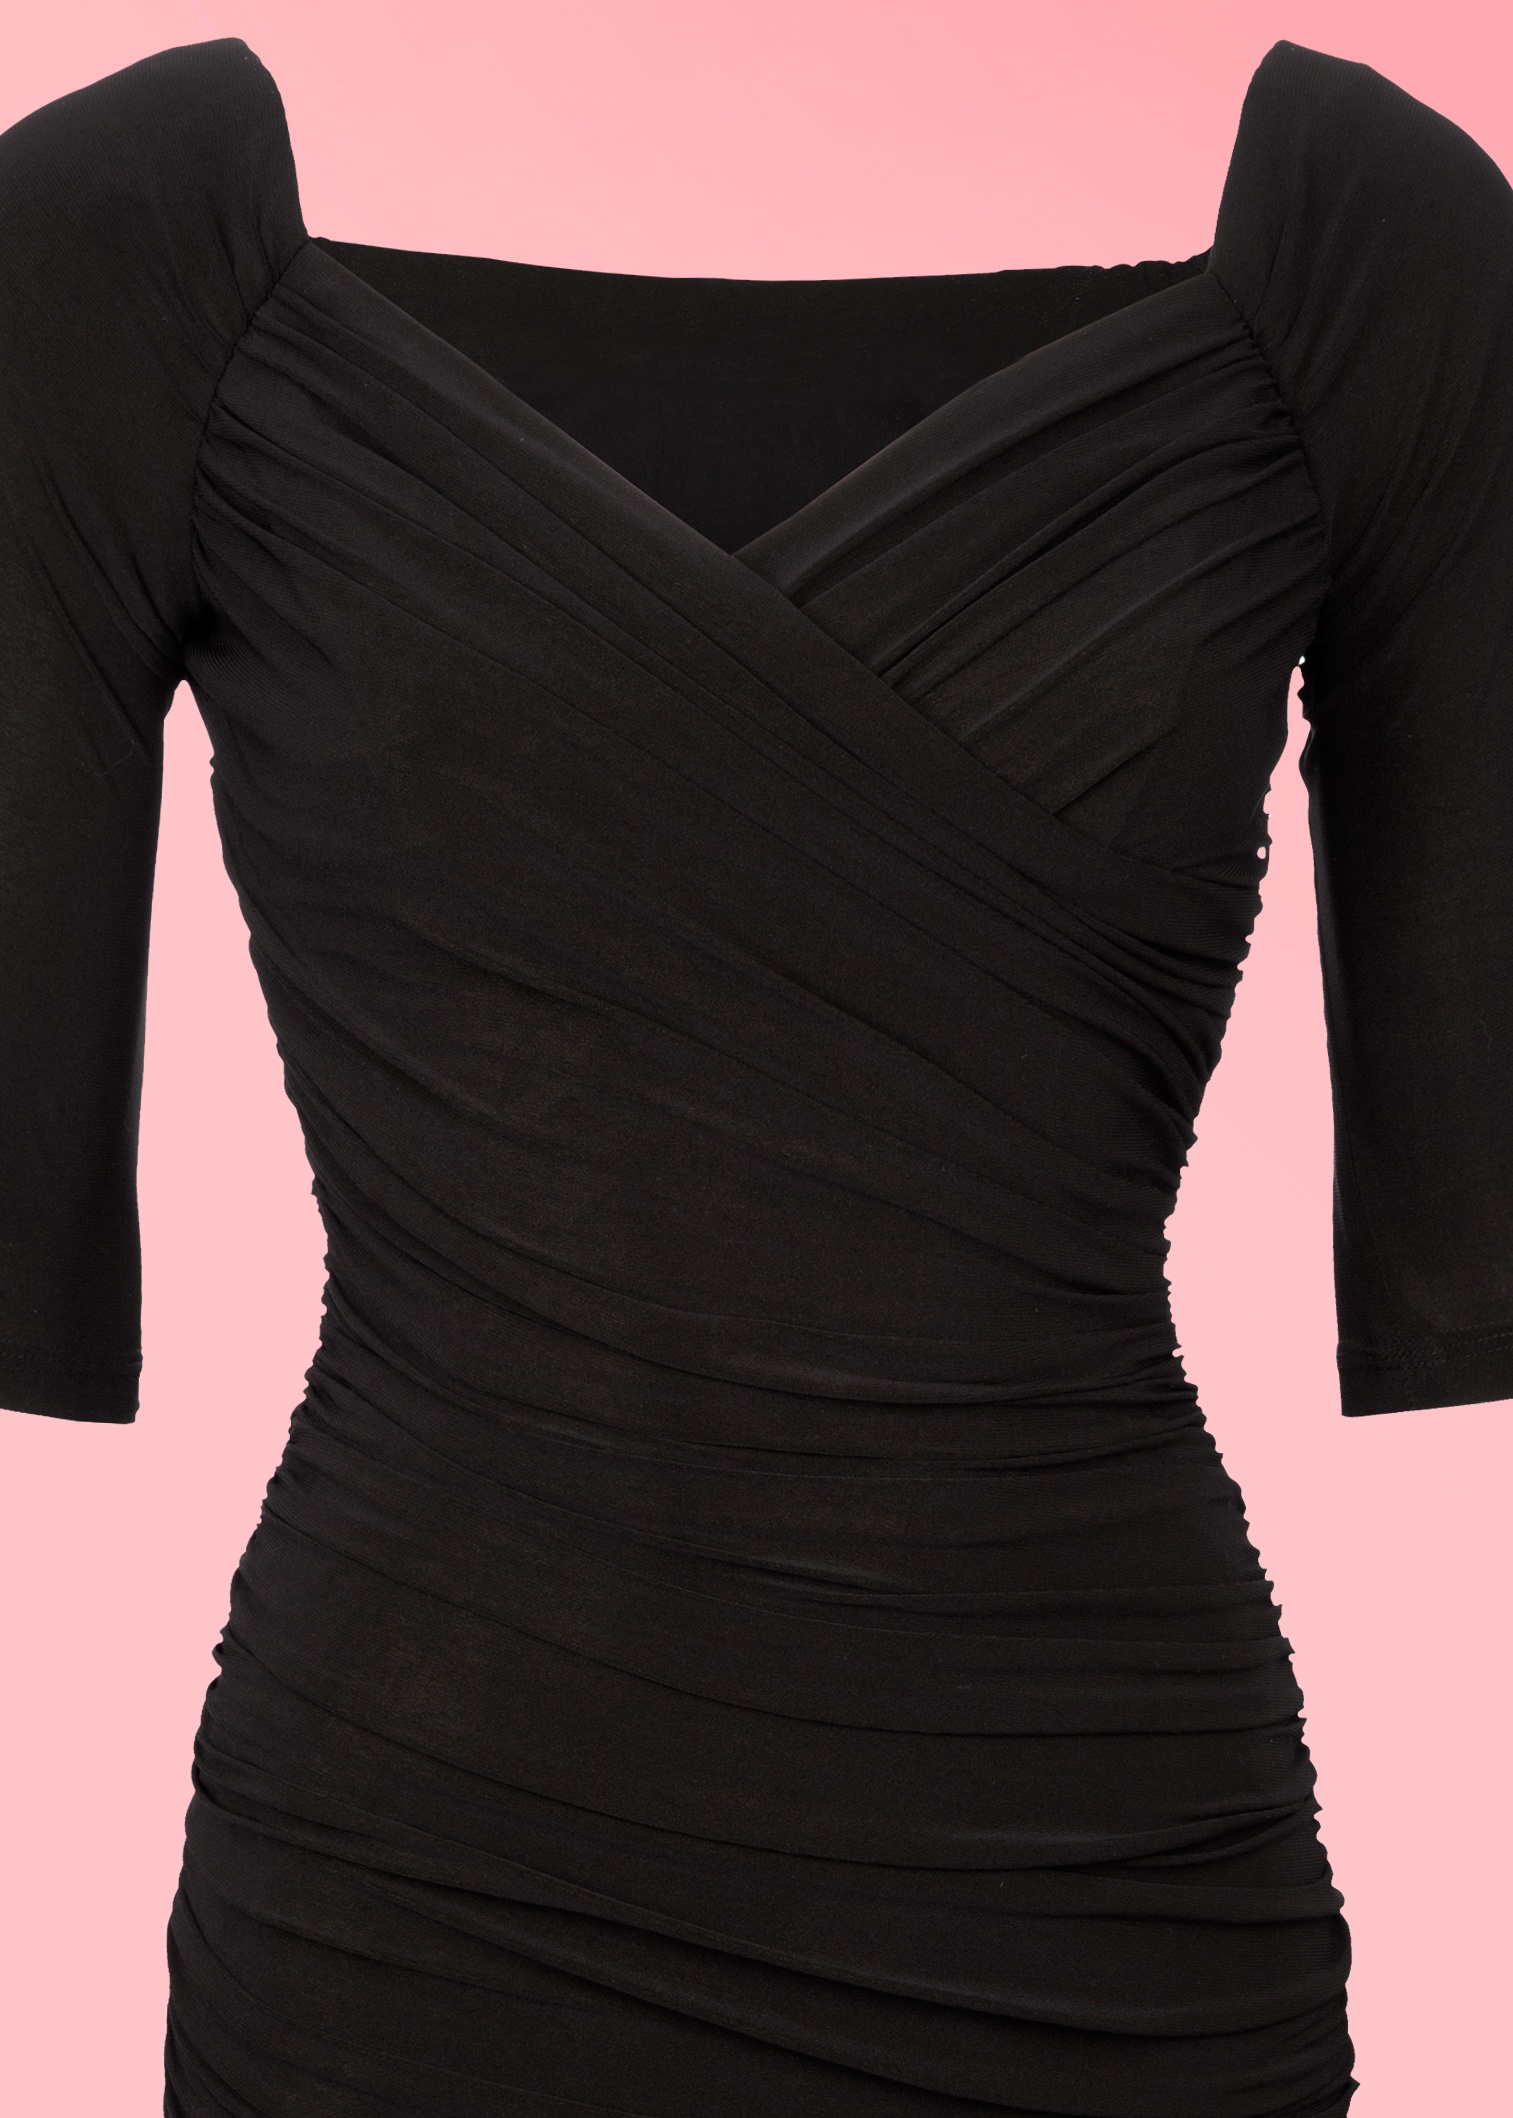 Pinup Couture - Monica Jurk in Zwart van Laura Byrnes Black Label 12